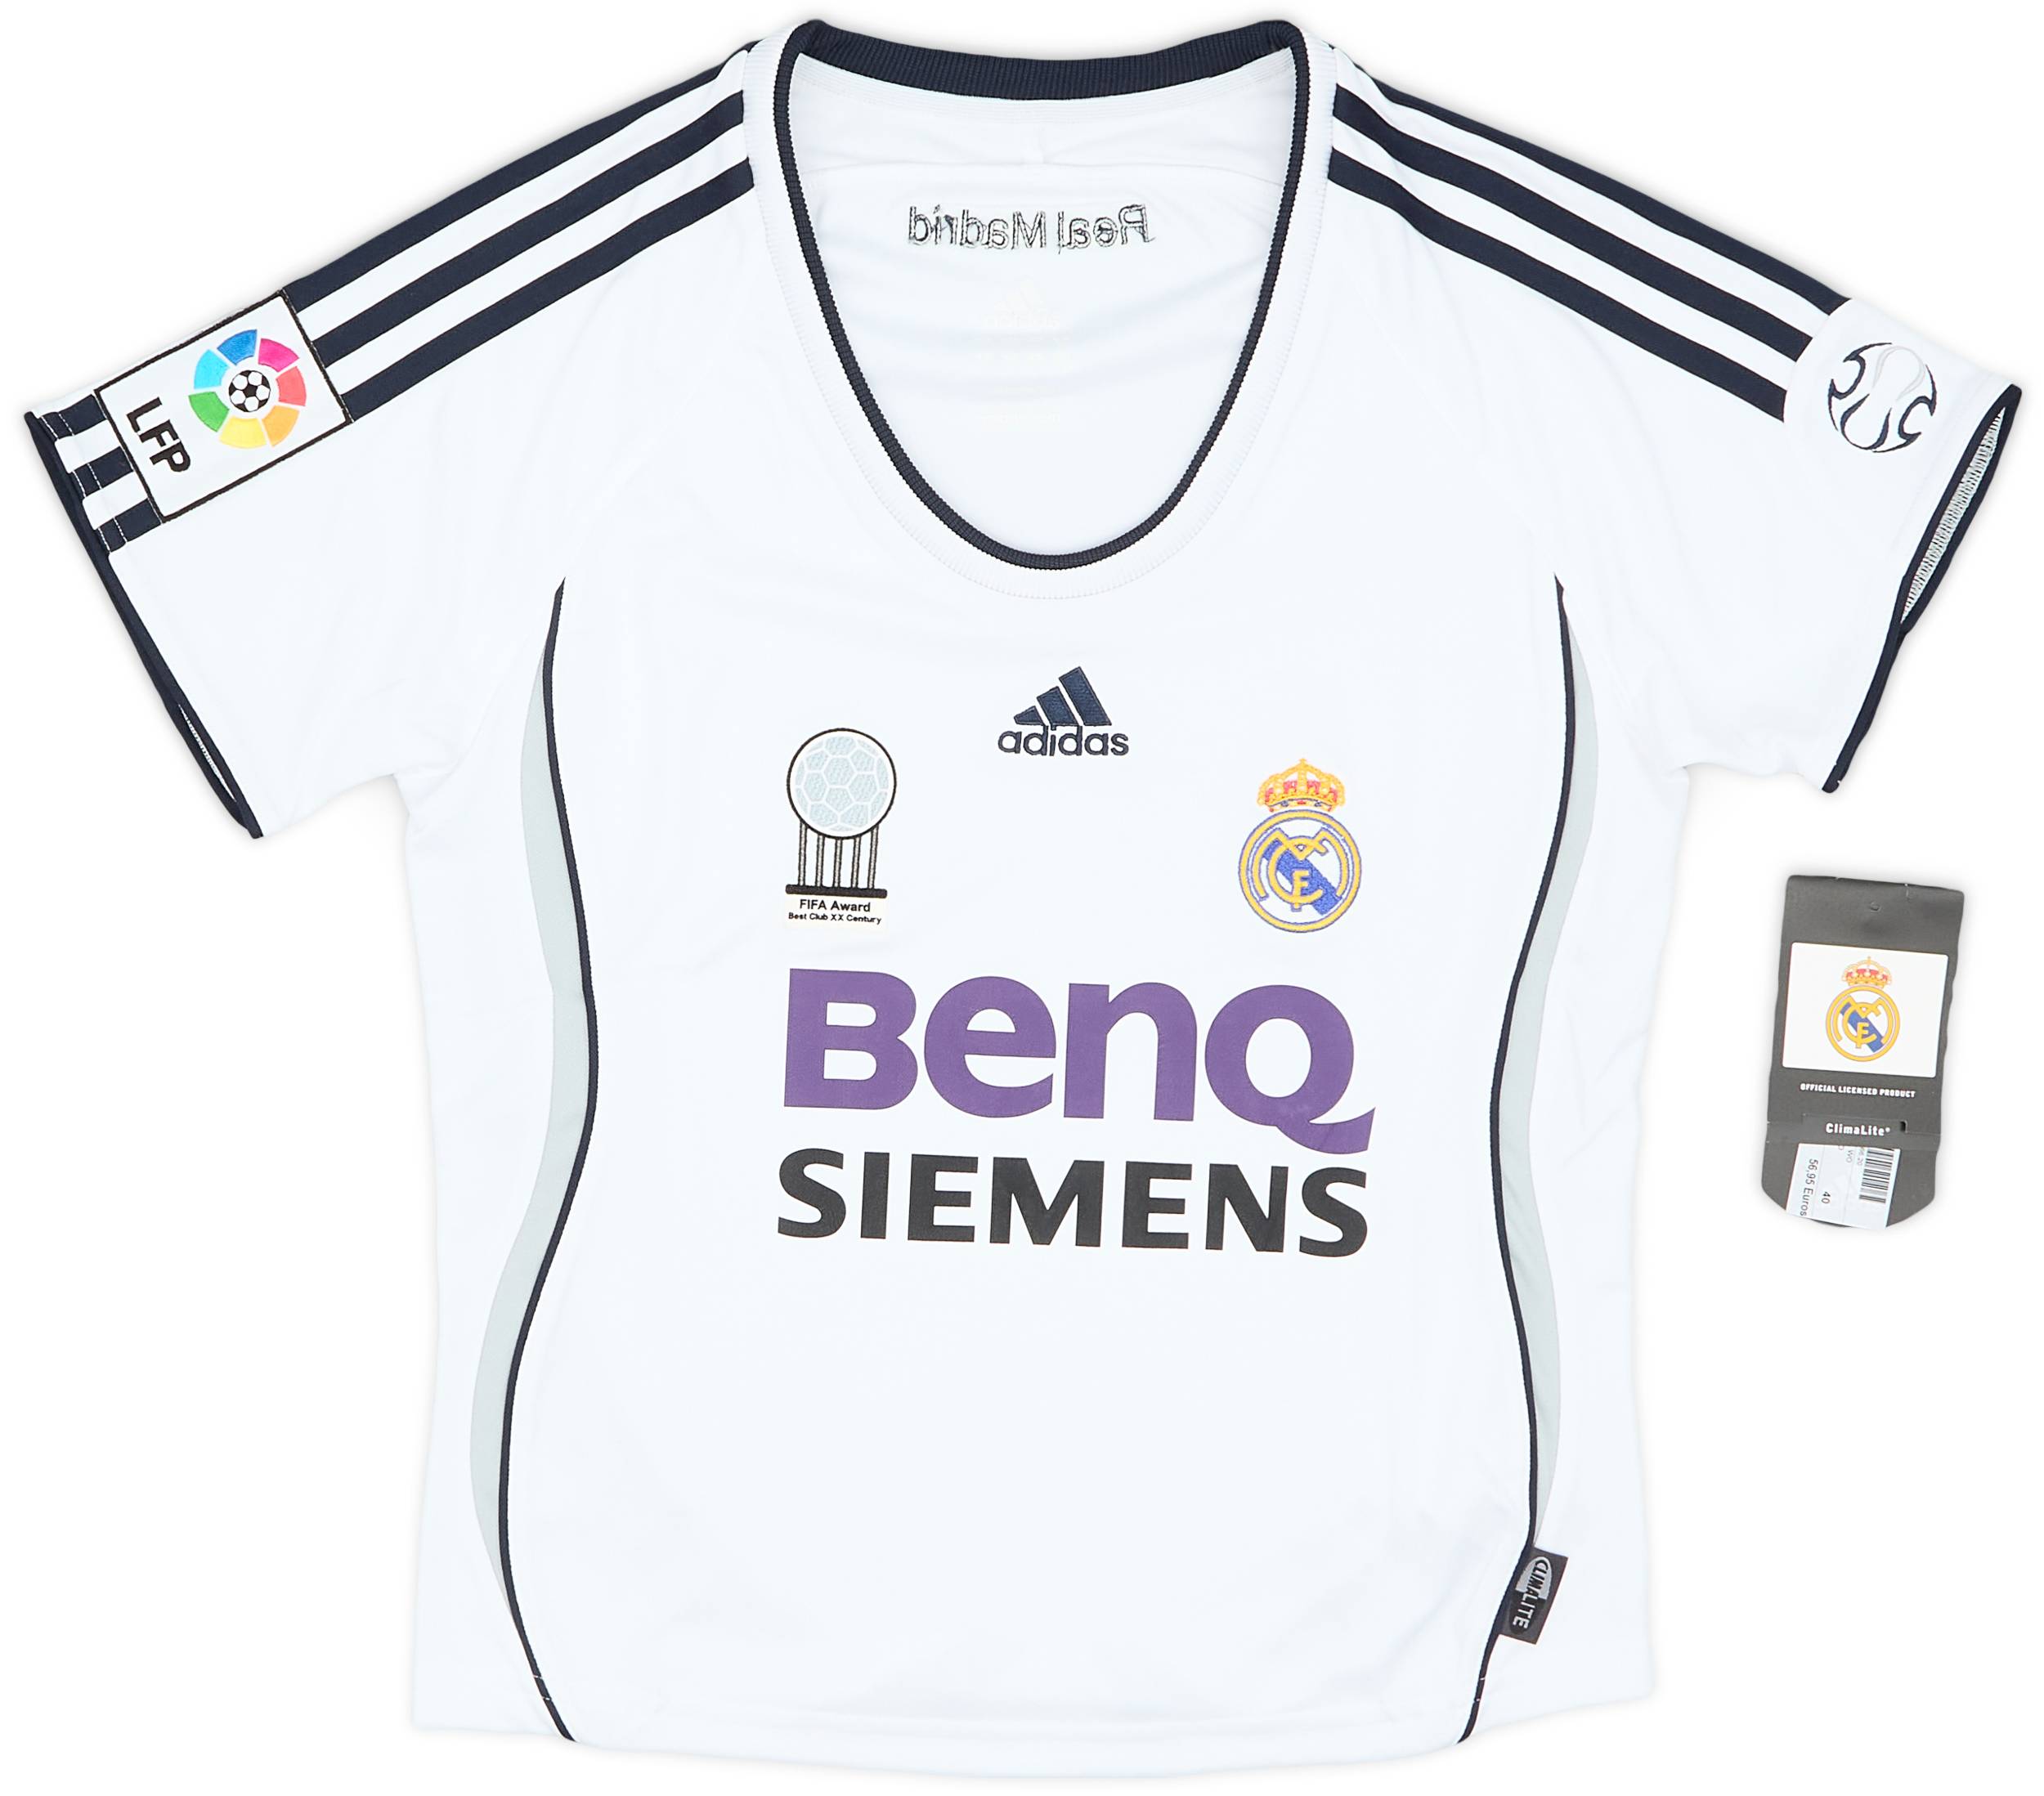 2006-07 Real Madrid Home Shirt (Women's M)